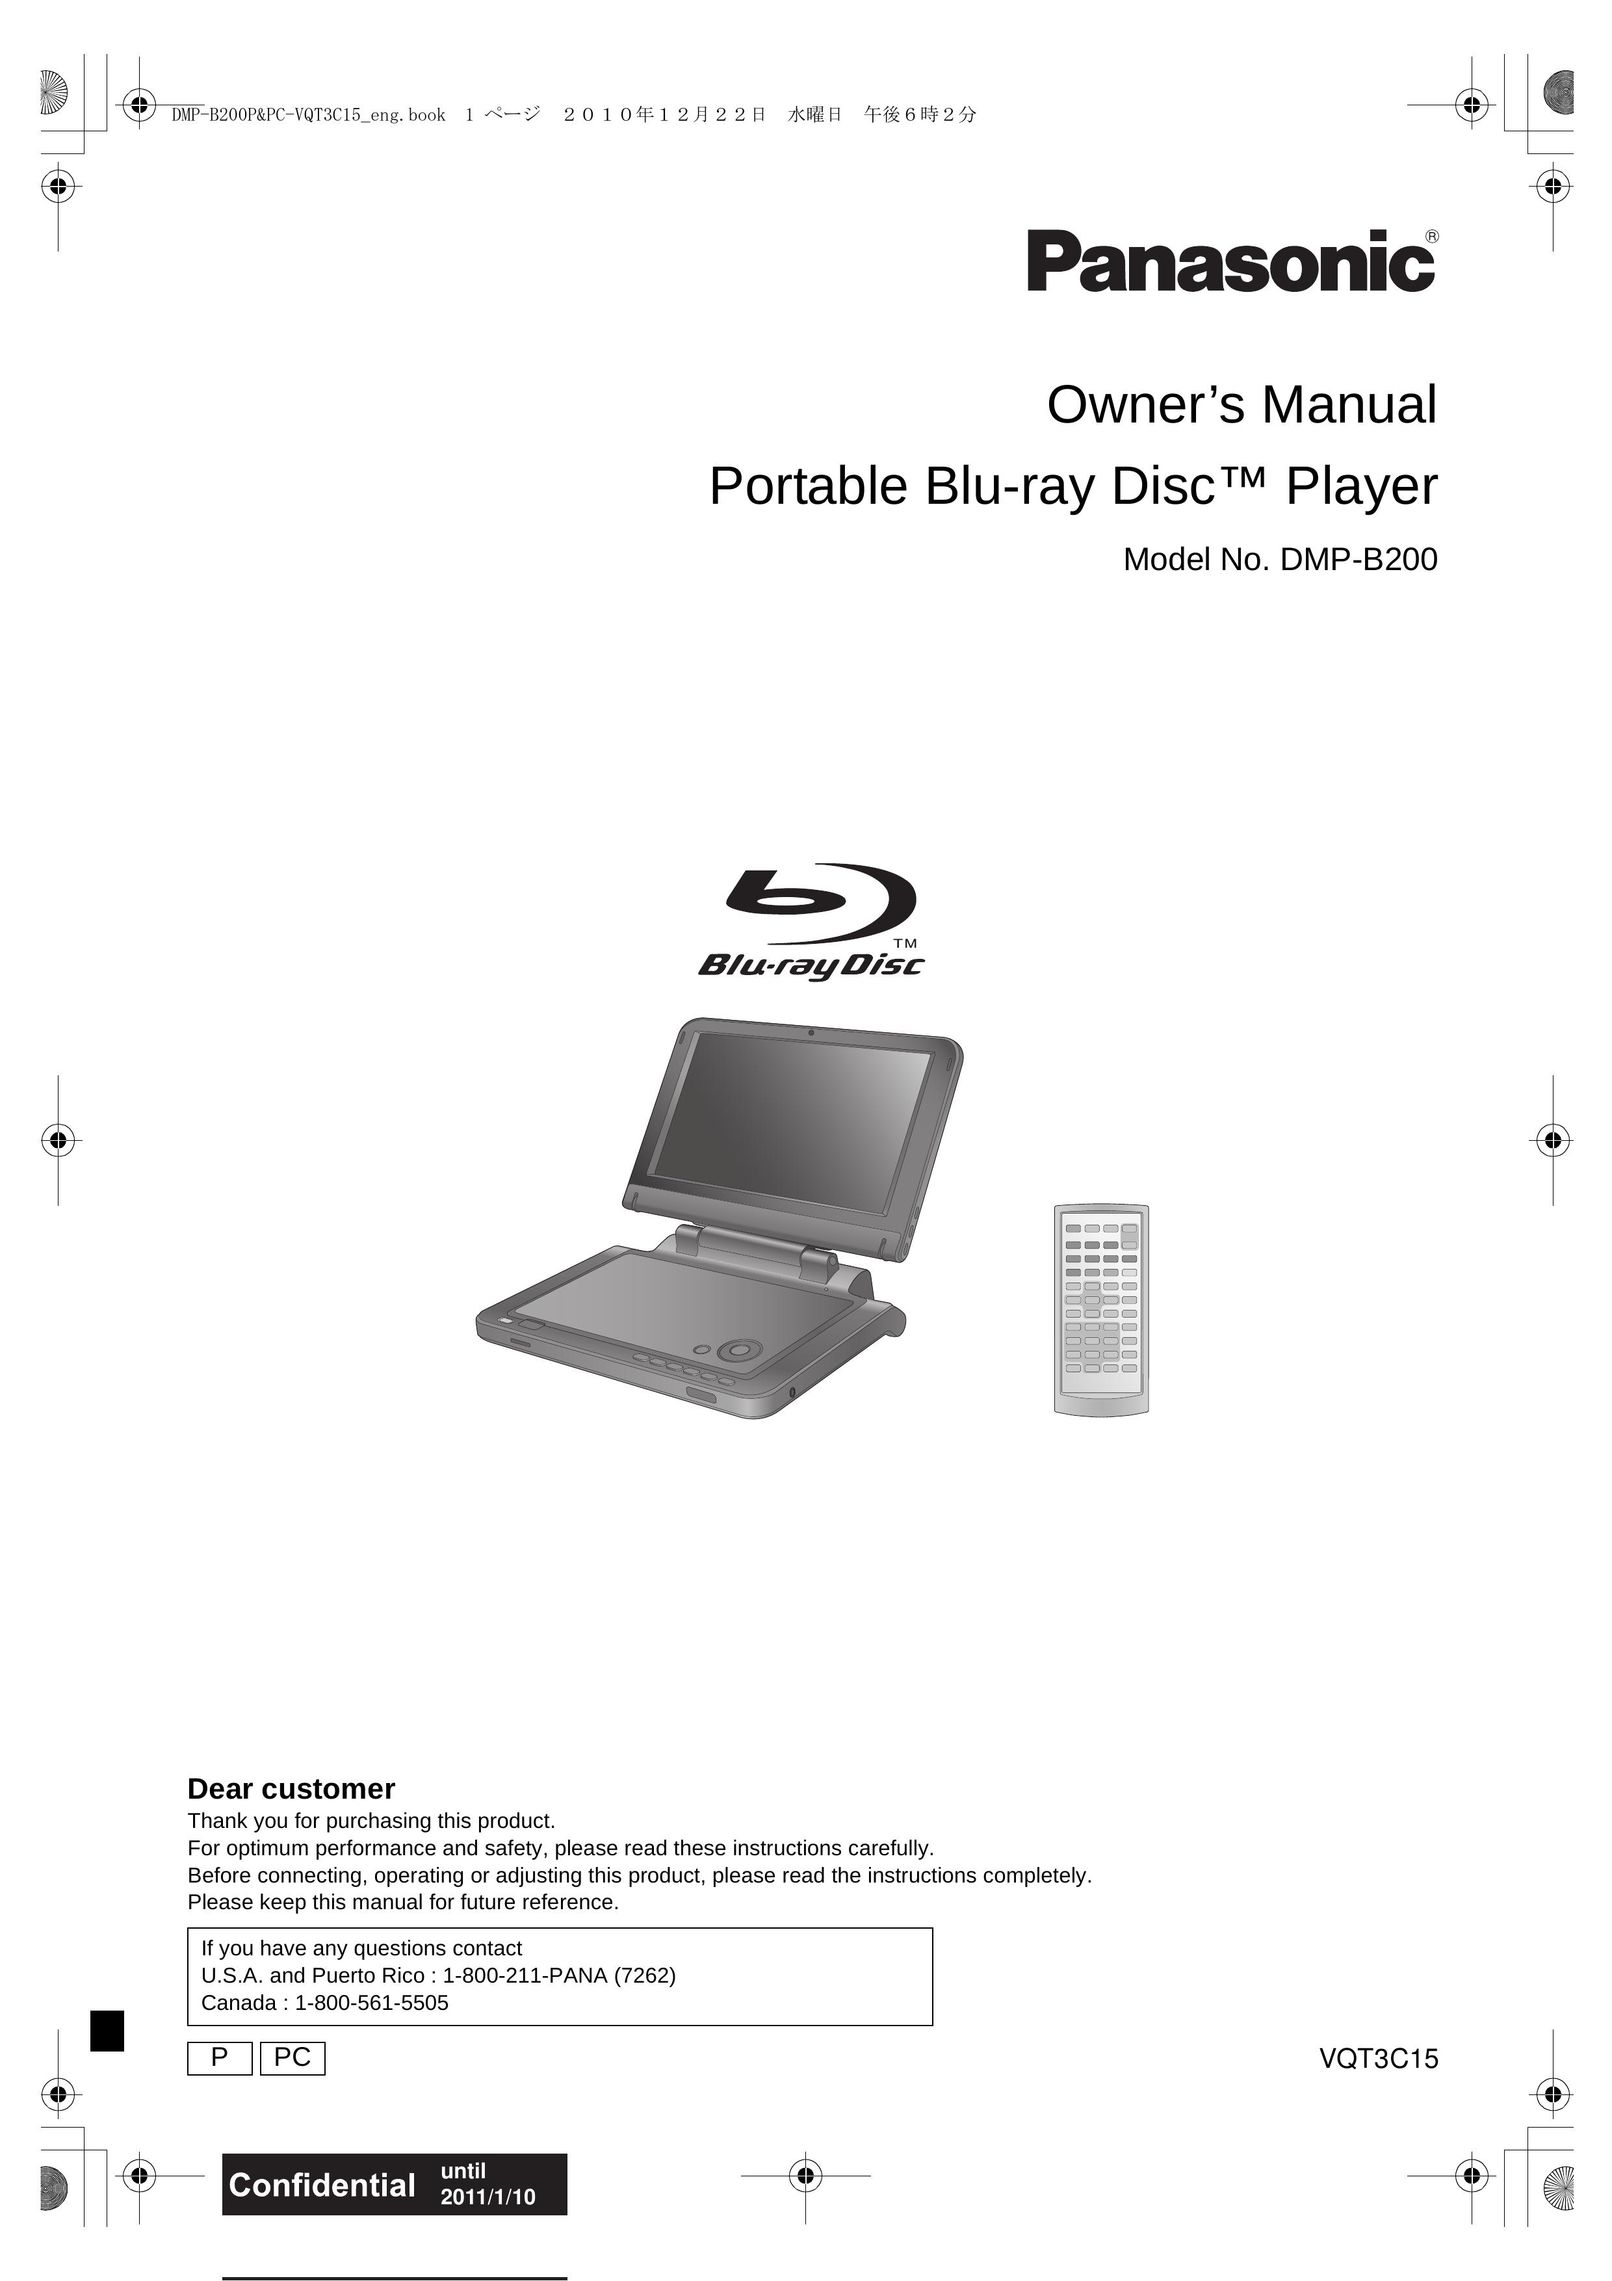 Panasonic DMP-B200 DVD Player User Manual